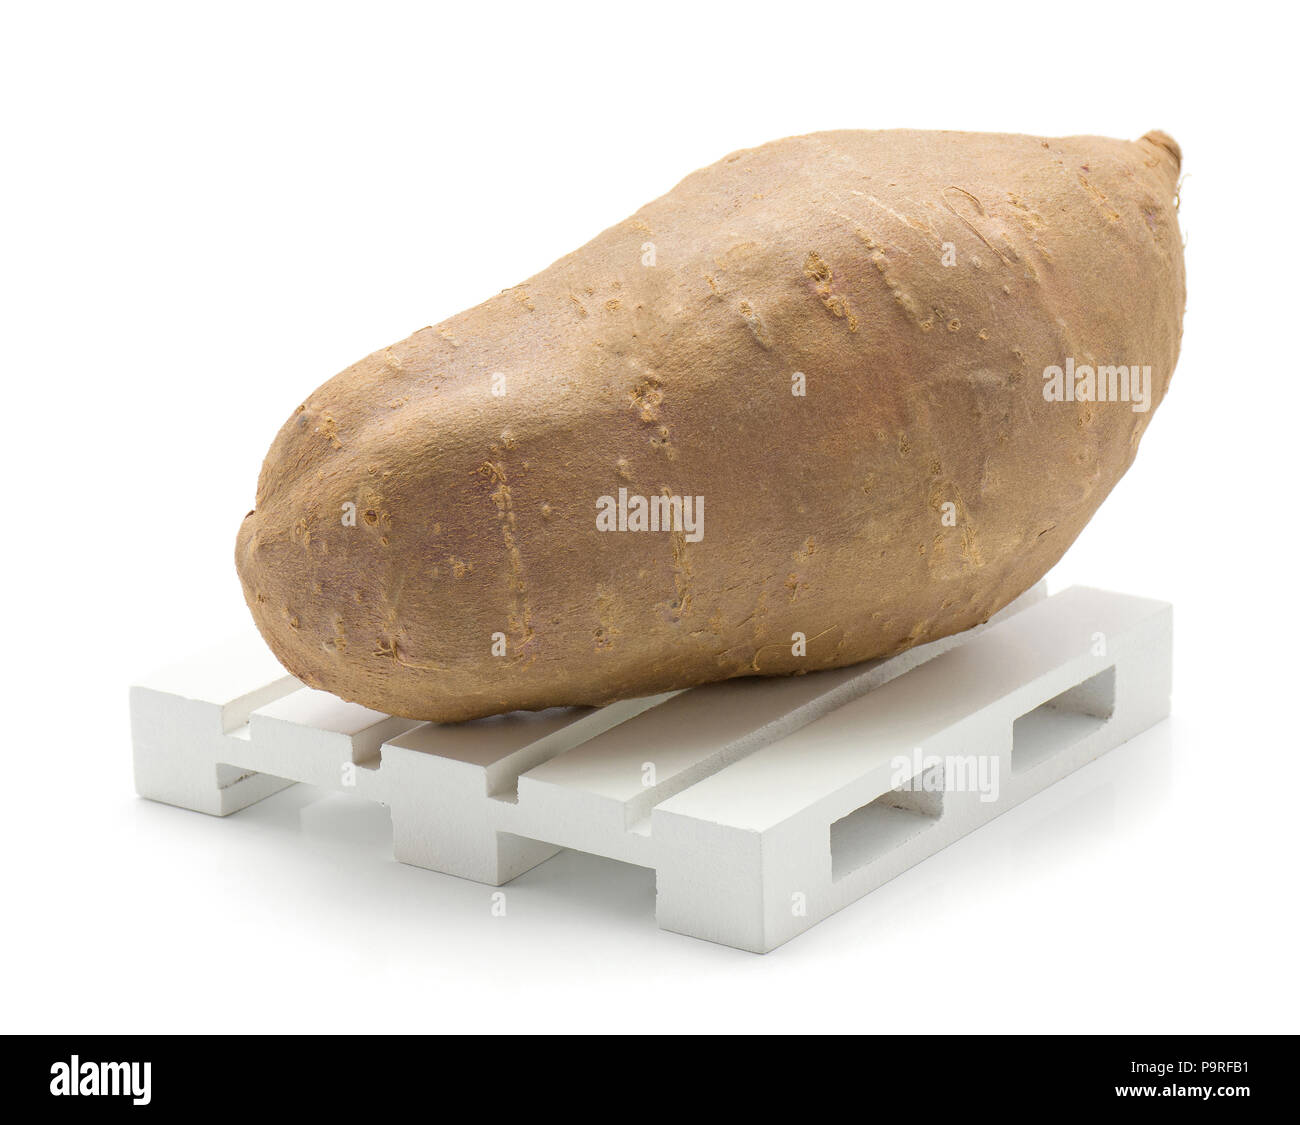 Sweet potato on a pallet isolated on white background one whole Stock Photo